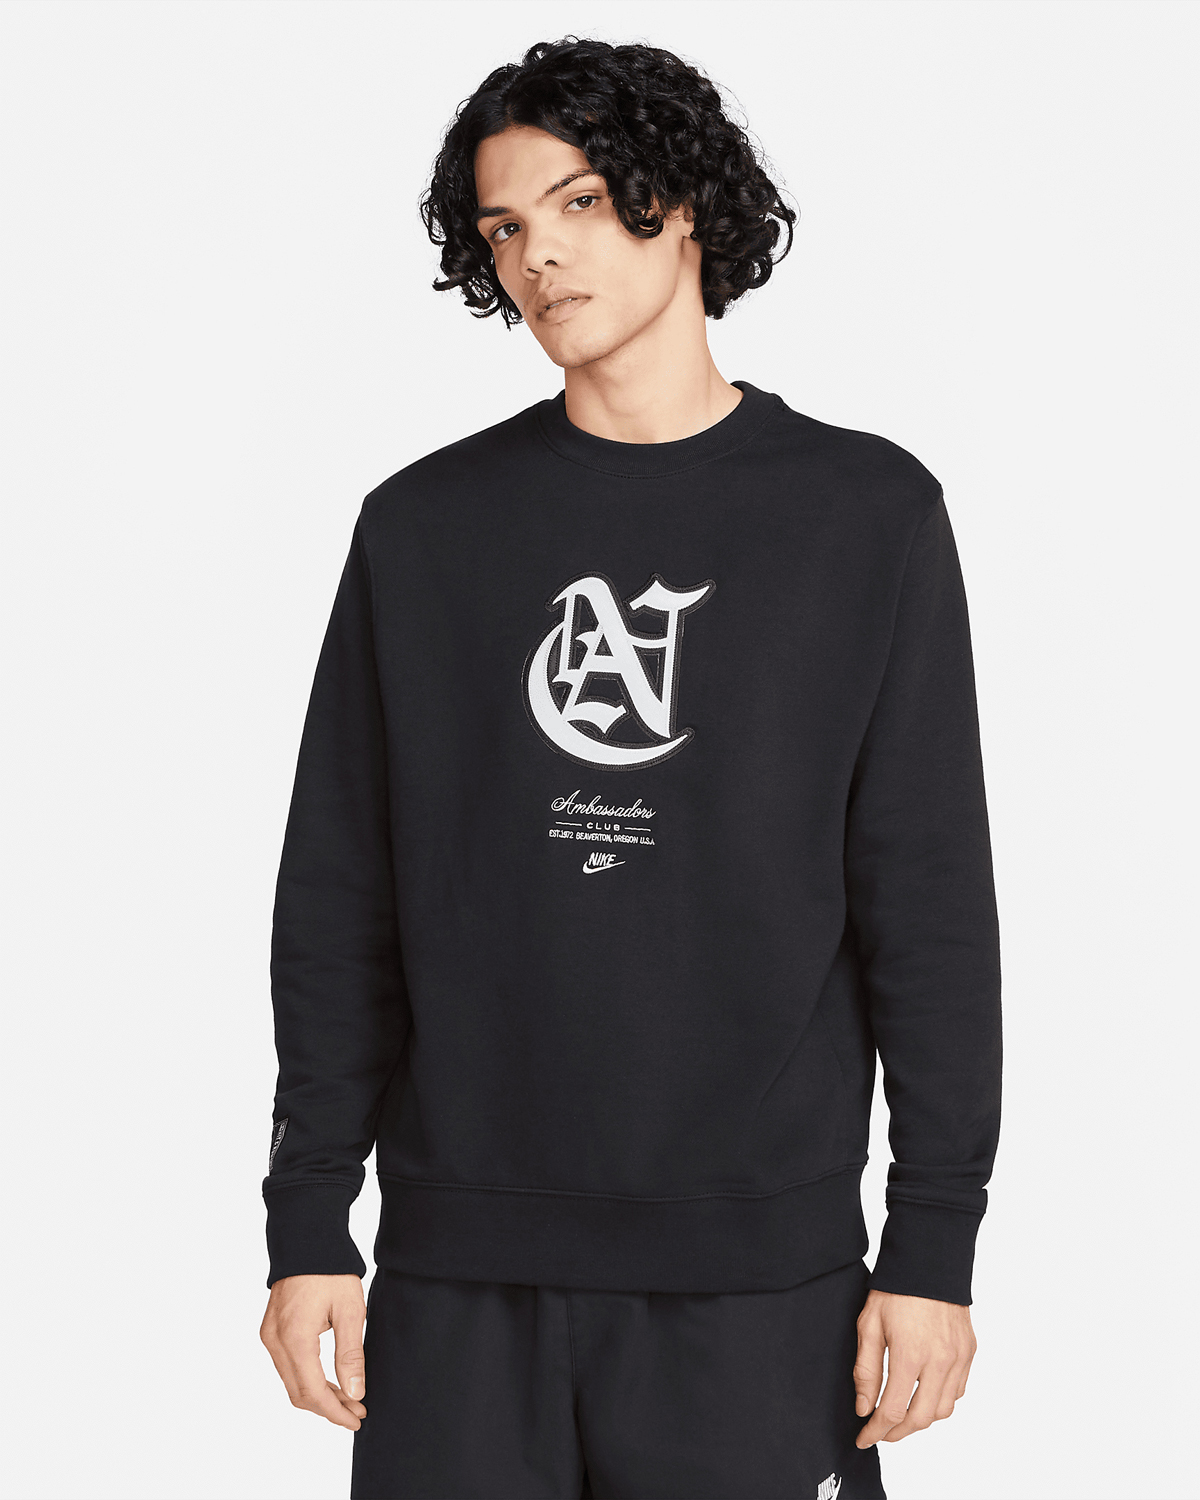 Nike-Club-Fleece-Ambassadors-Sweatshirt-Black-White